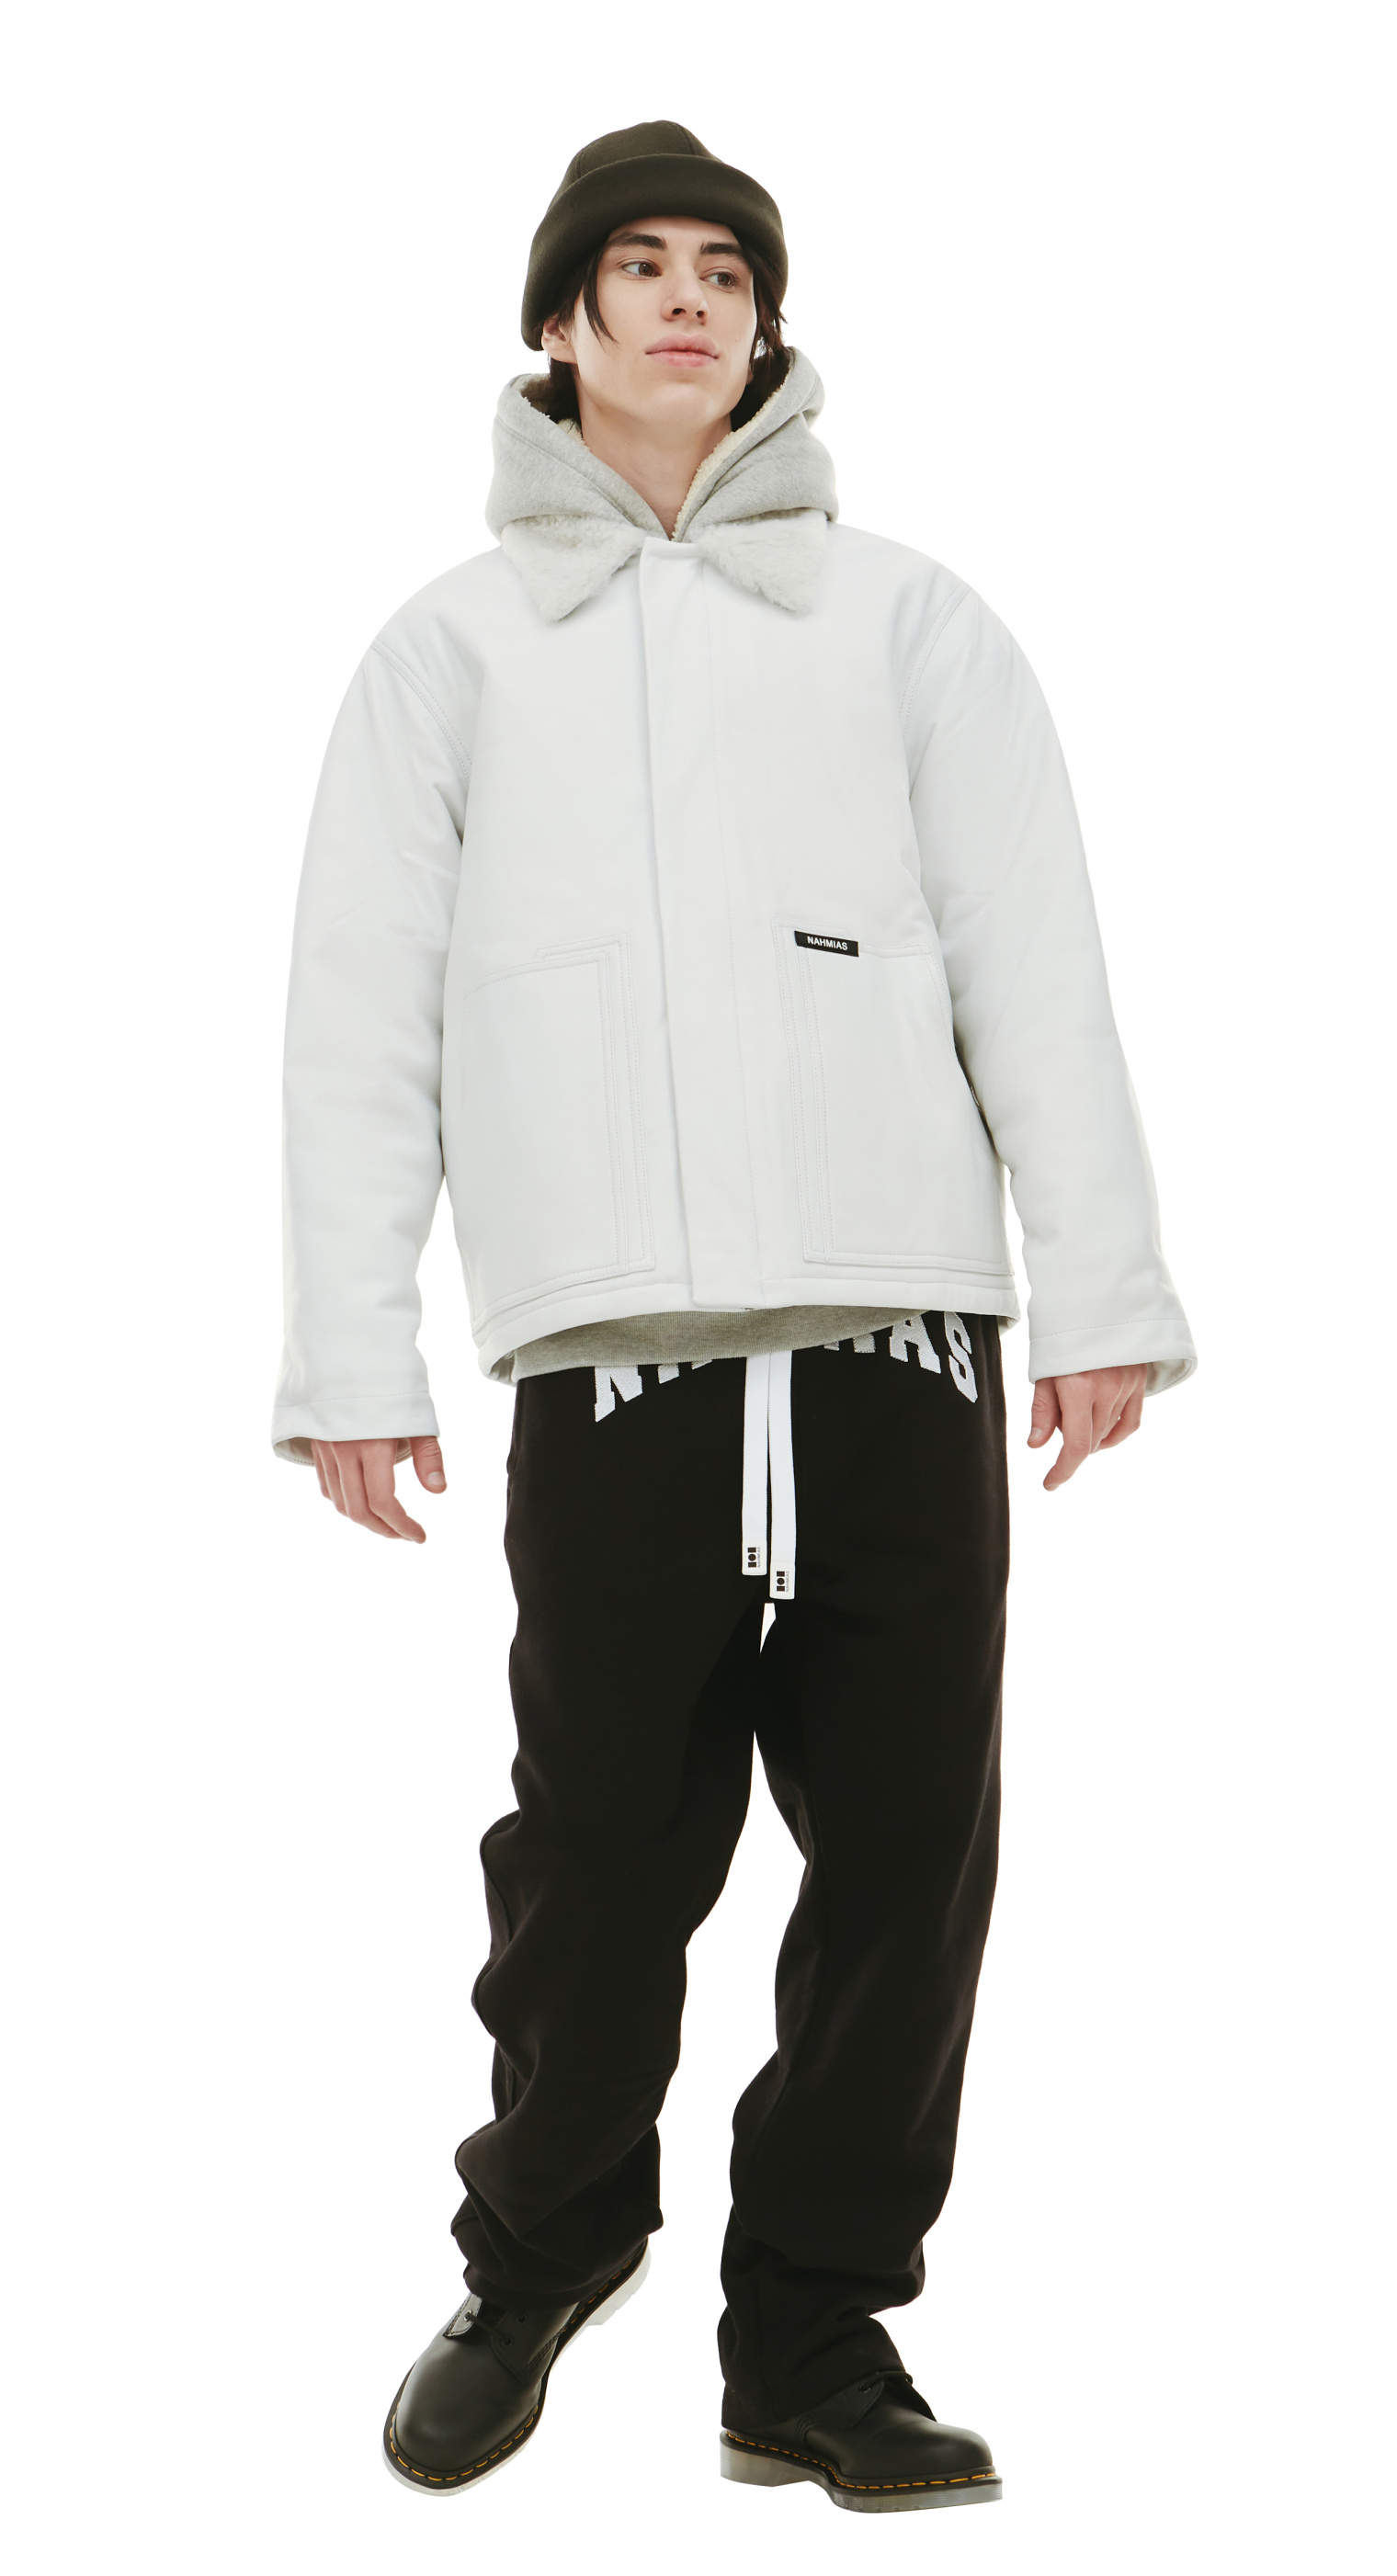 Buy Nahmias men white leather carperent jacket for $2,405 online